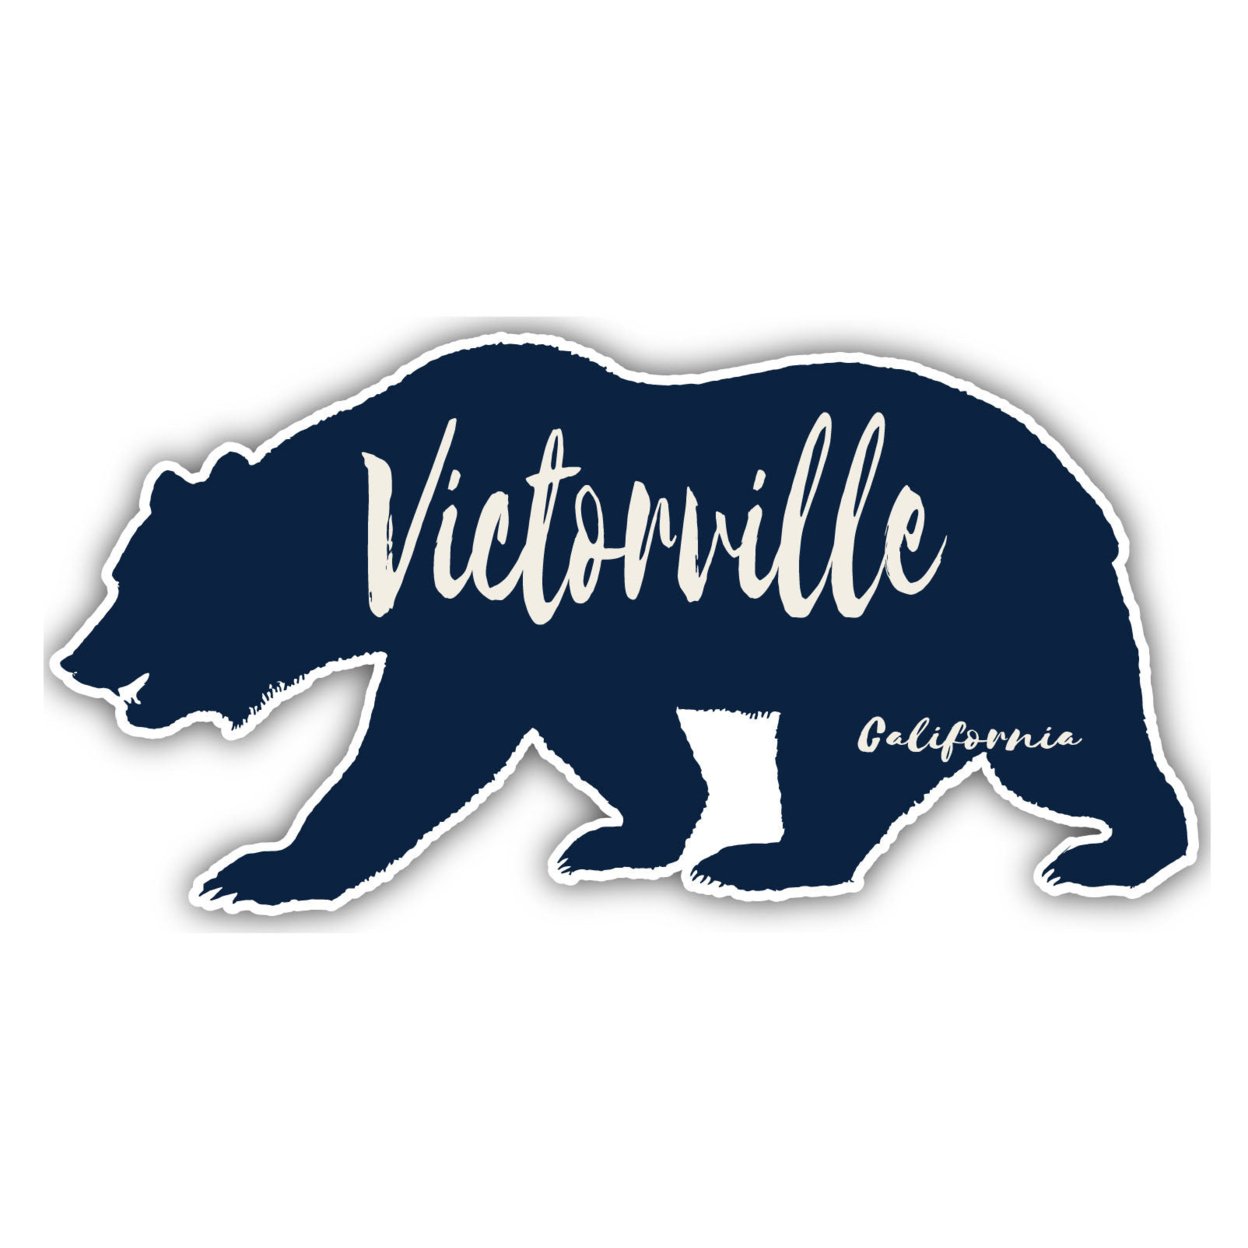 Victorville California Souvenir Decorative Stickers (Choose Theme And Size) - Single Unit, 2-Inch, Bear